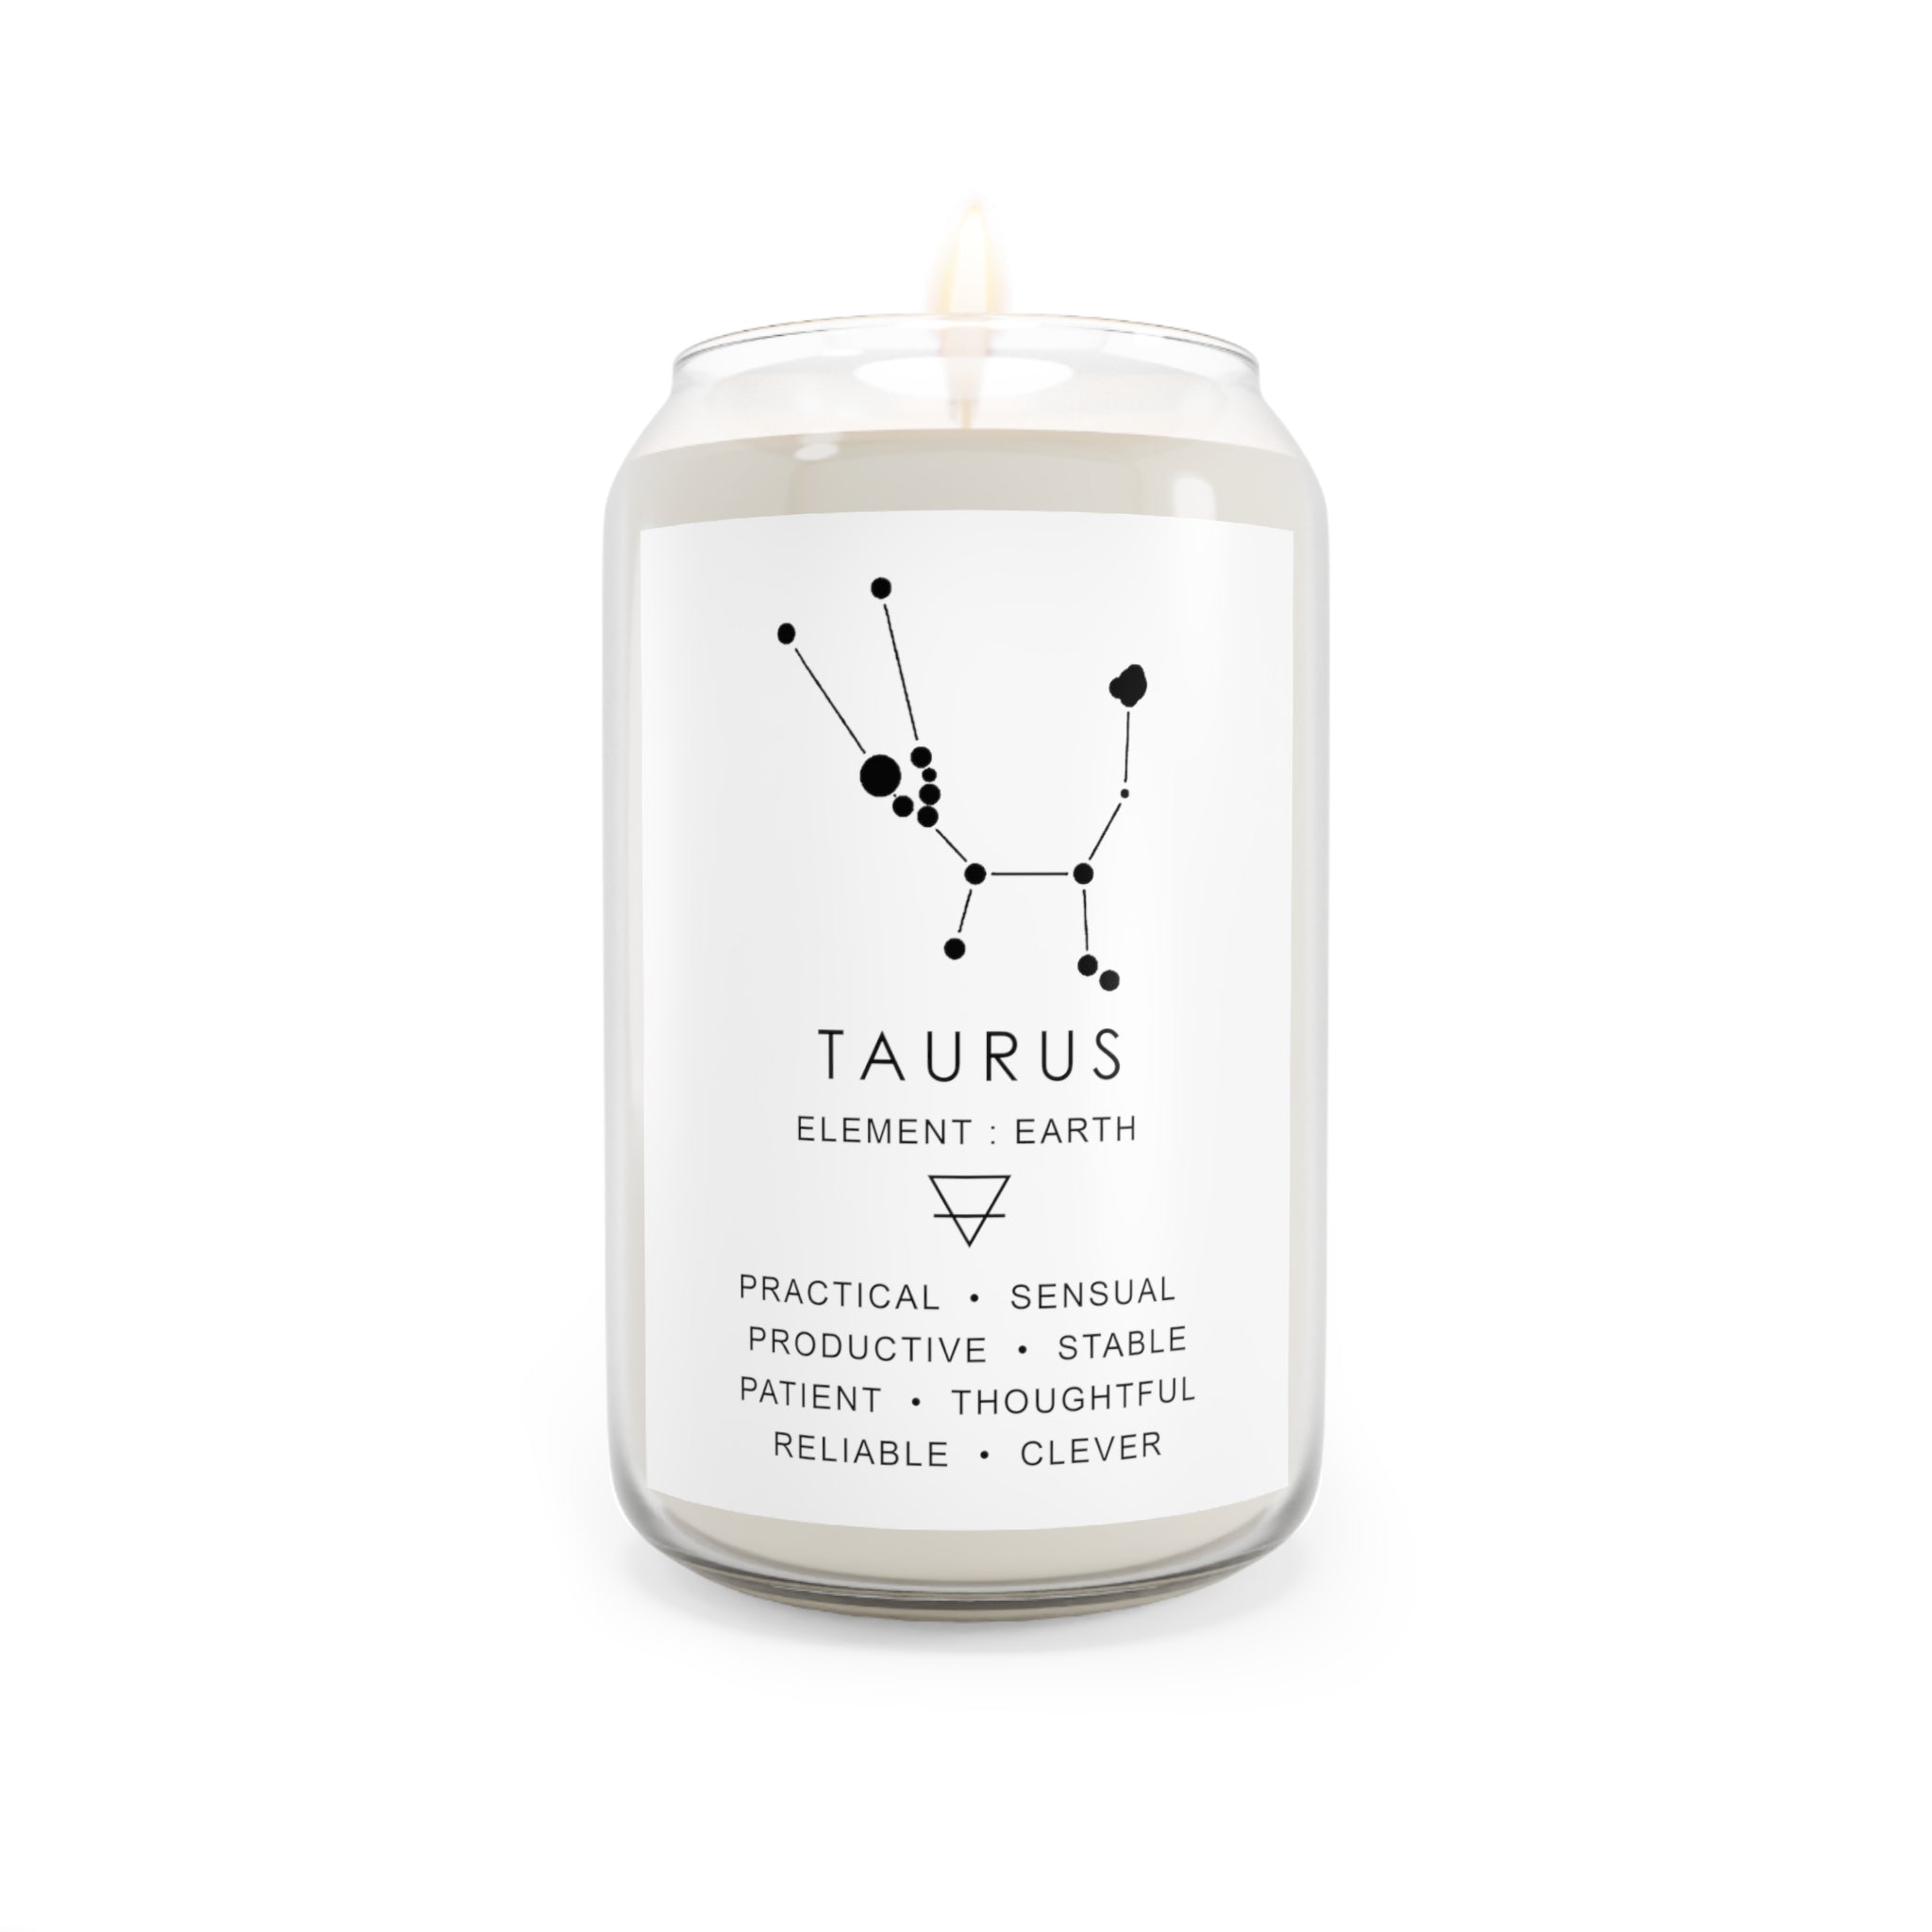 Taurus Zodiac Luxe Candle